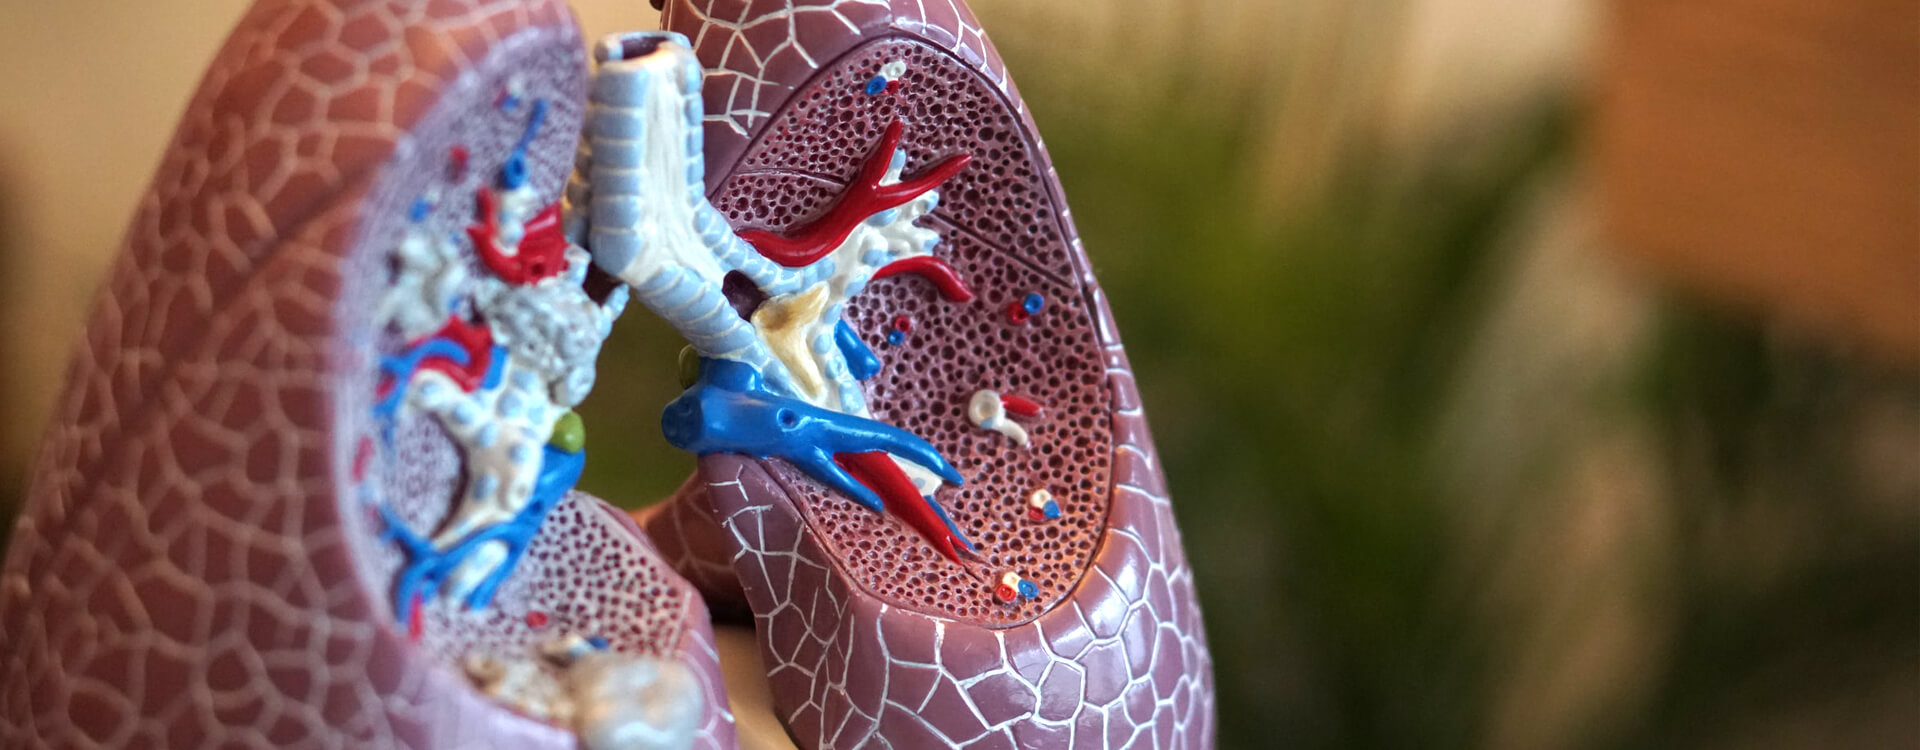 Model ľudských pľúc